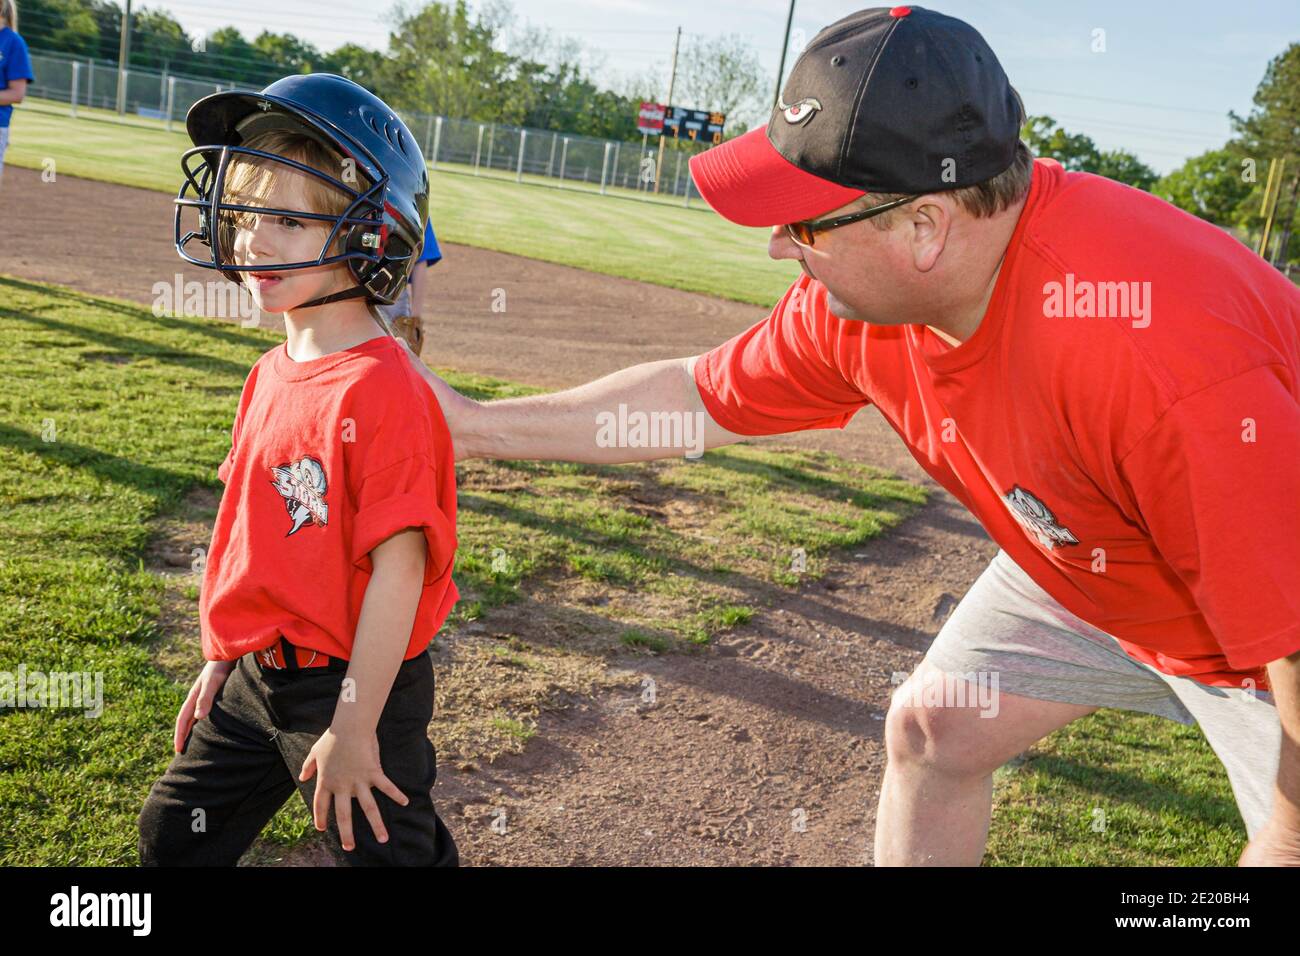 Alabama Troy Sportsplex Little League baseball, uomo uomo allenatore ragazza base runner, Foto Stock